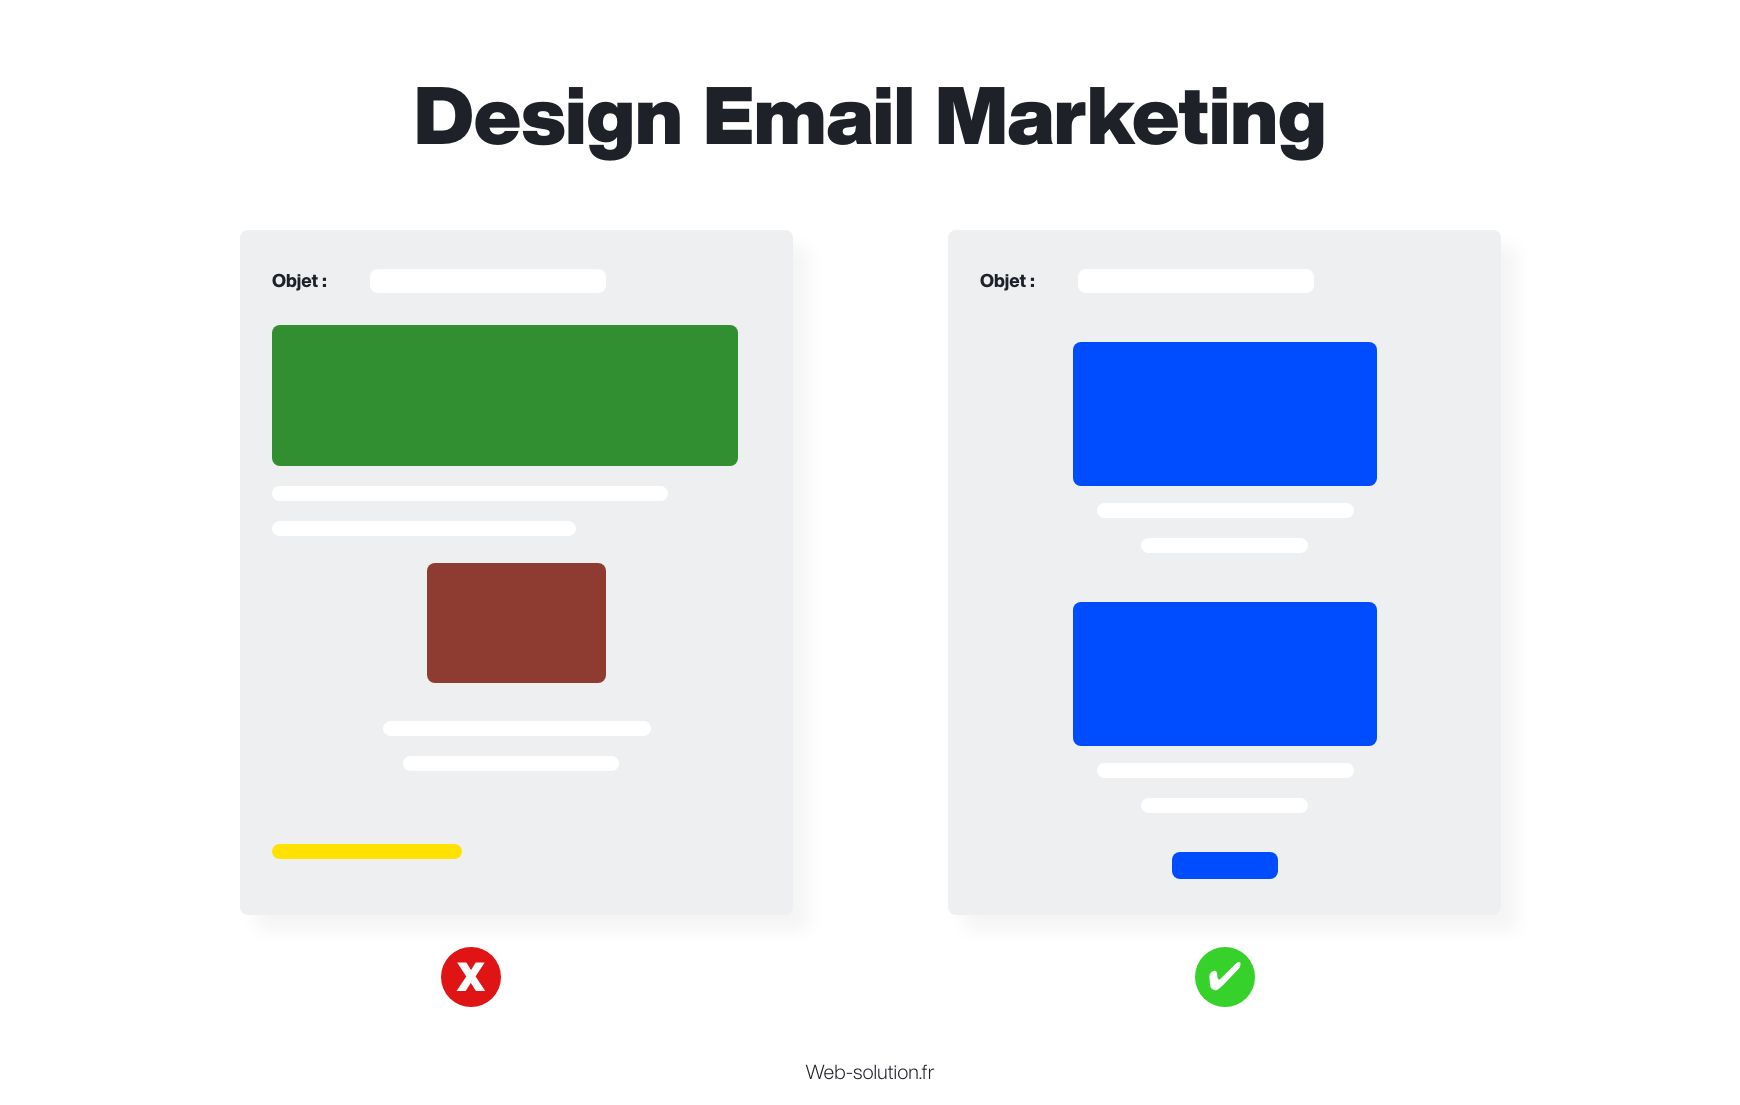 Design Email Marketing